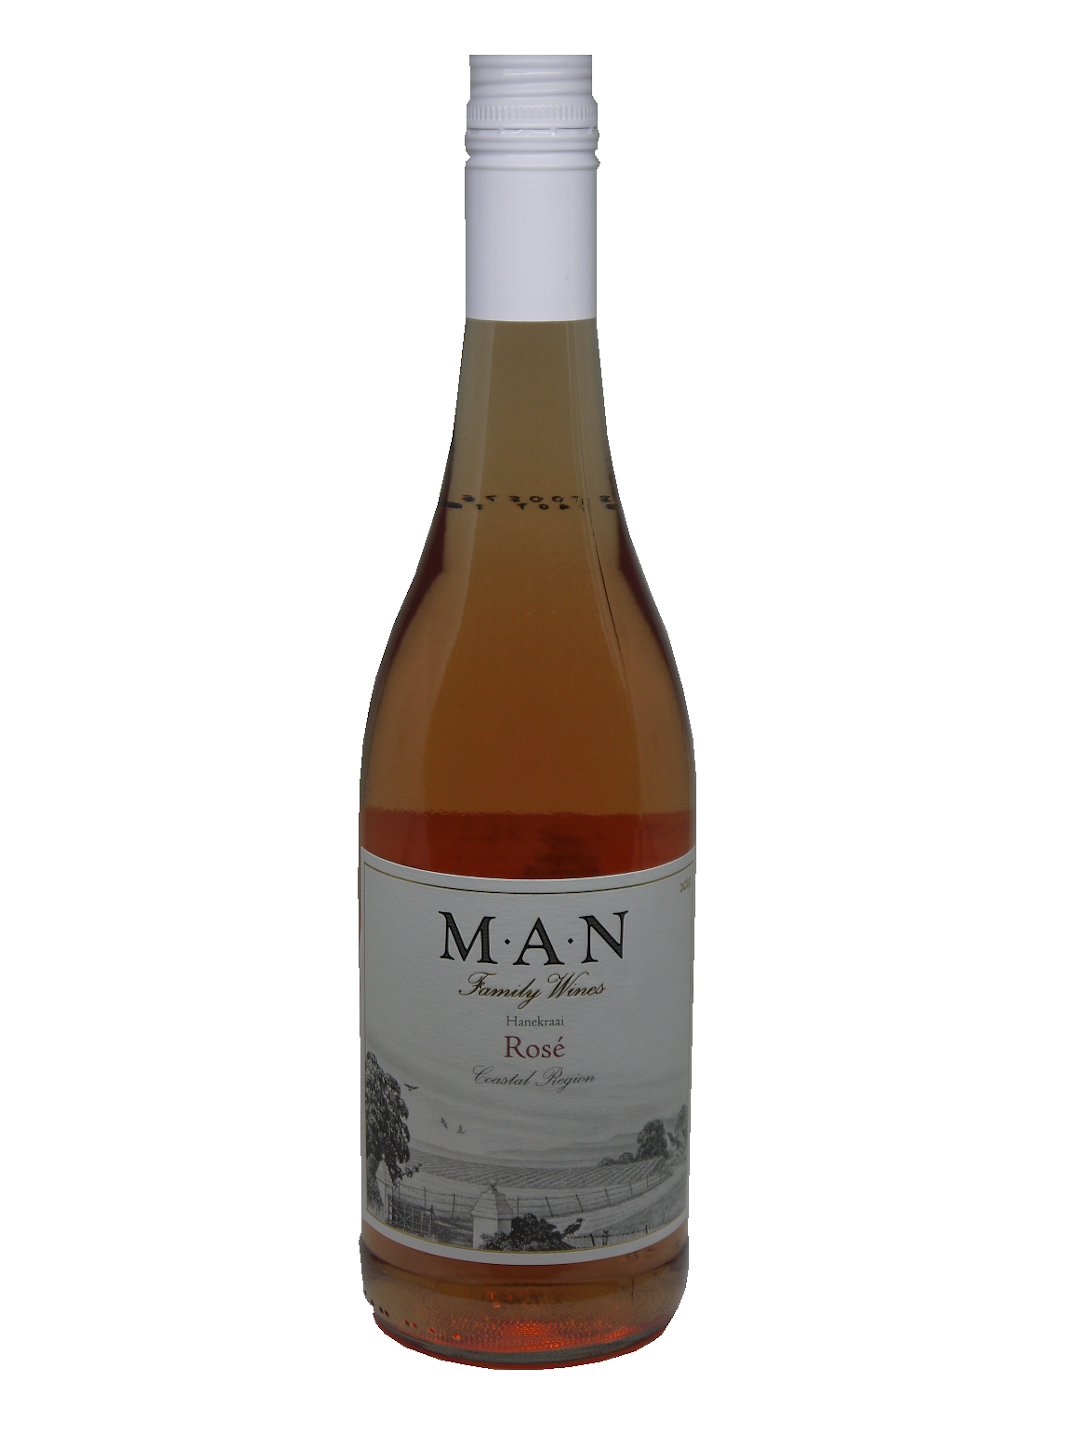 MAN Family Wines Hanekraai Rose